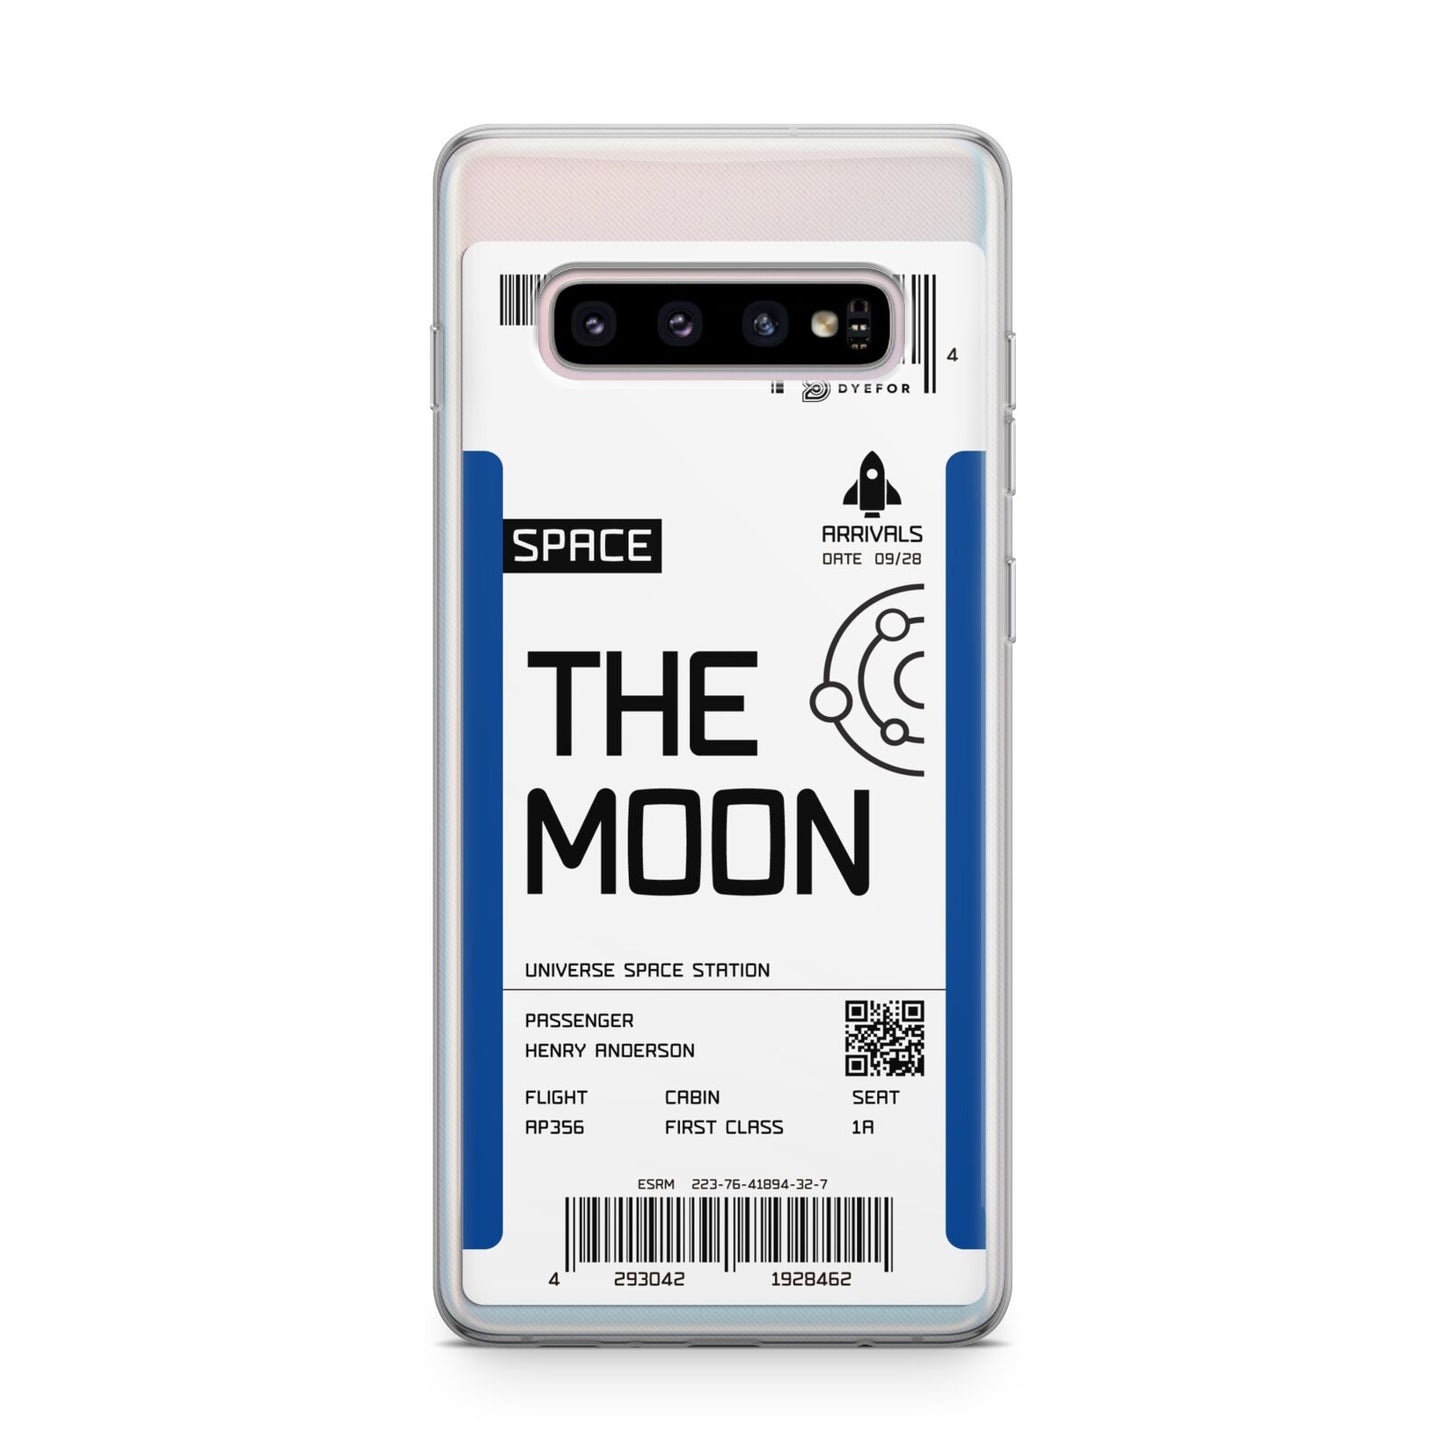 The Moon Boarding Pass Samsung Galaxy S10 Plus Case